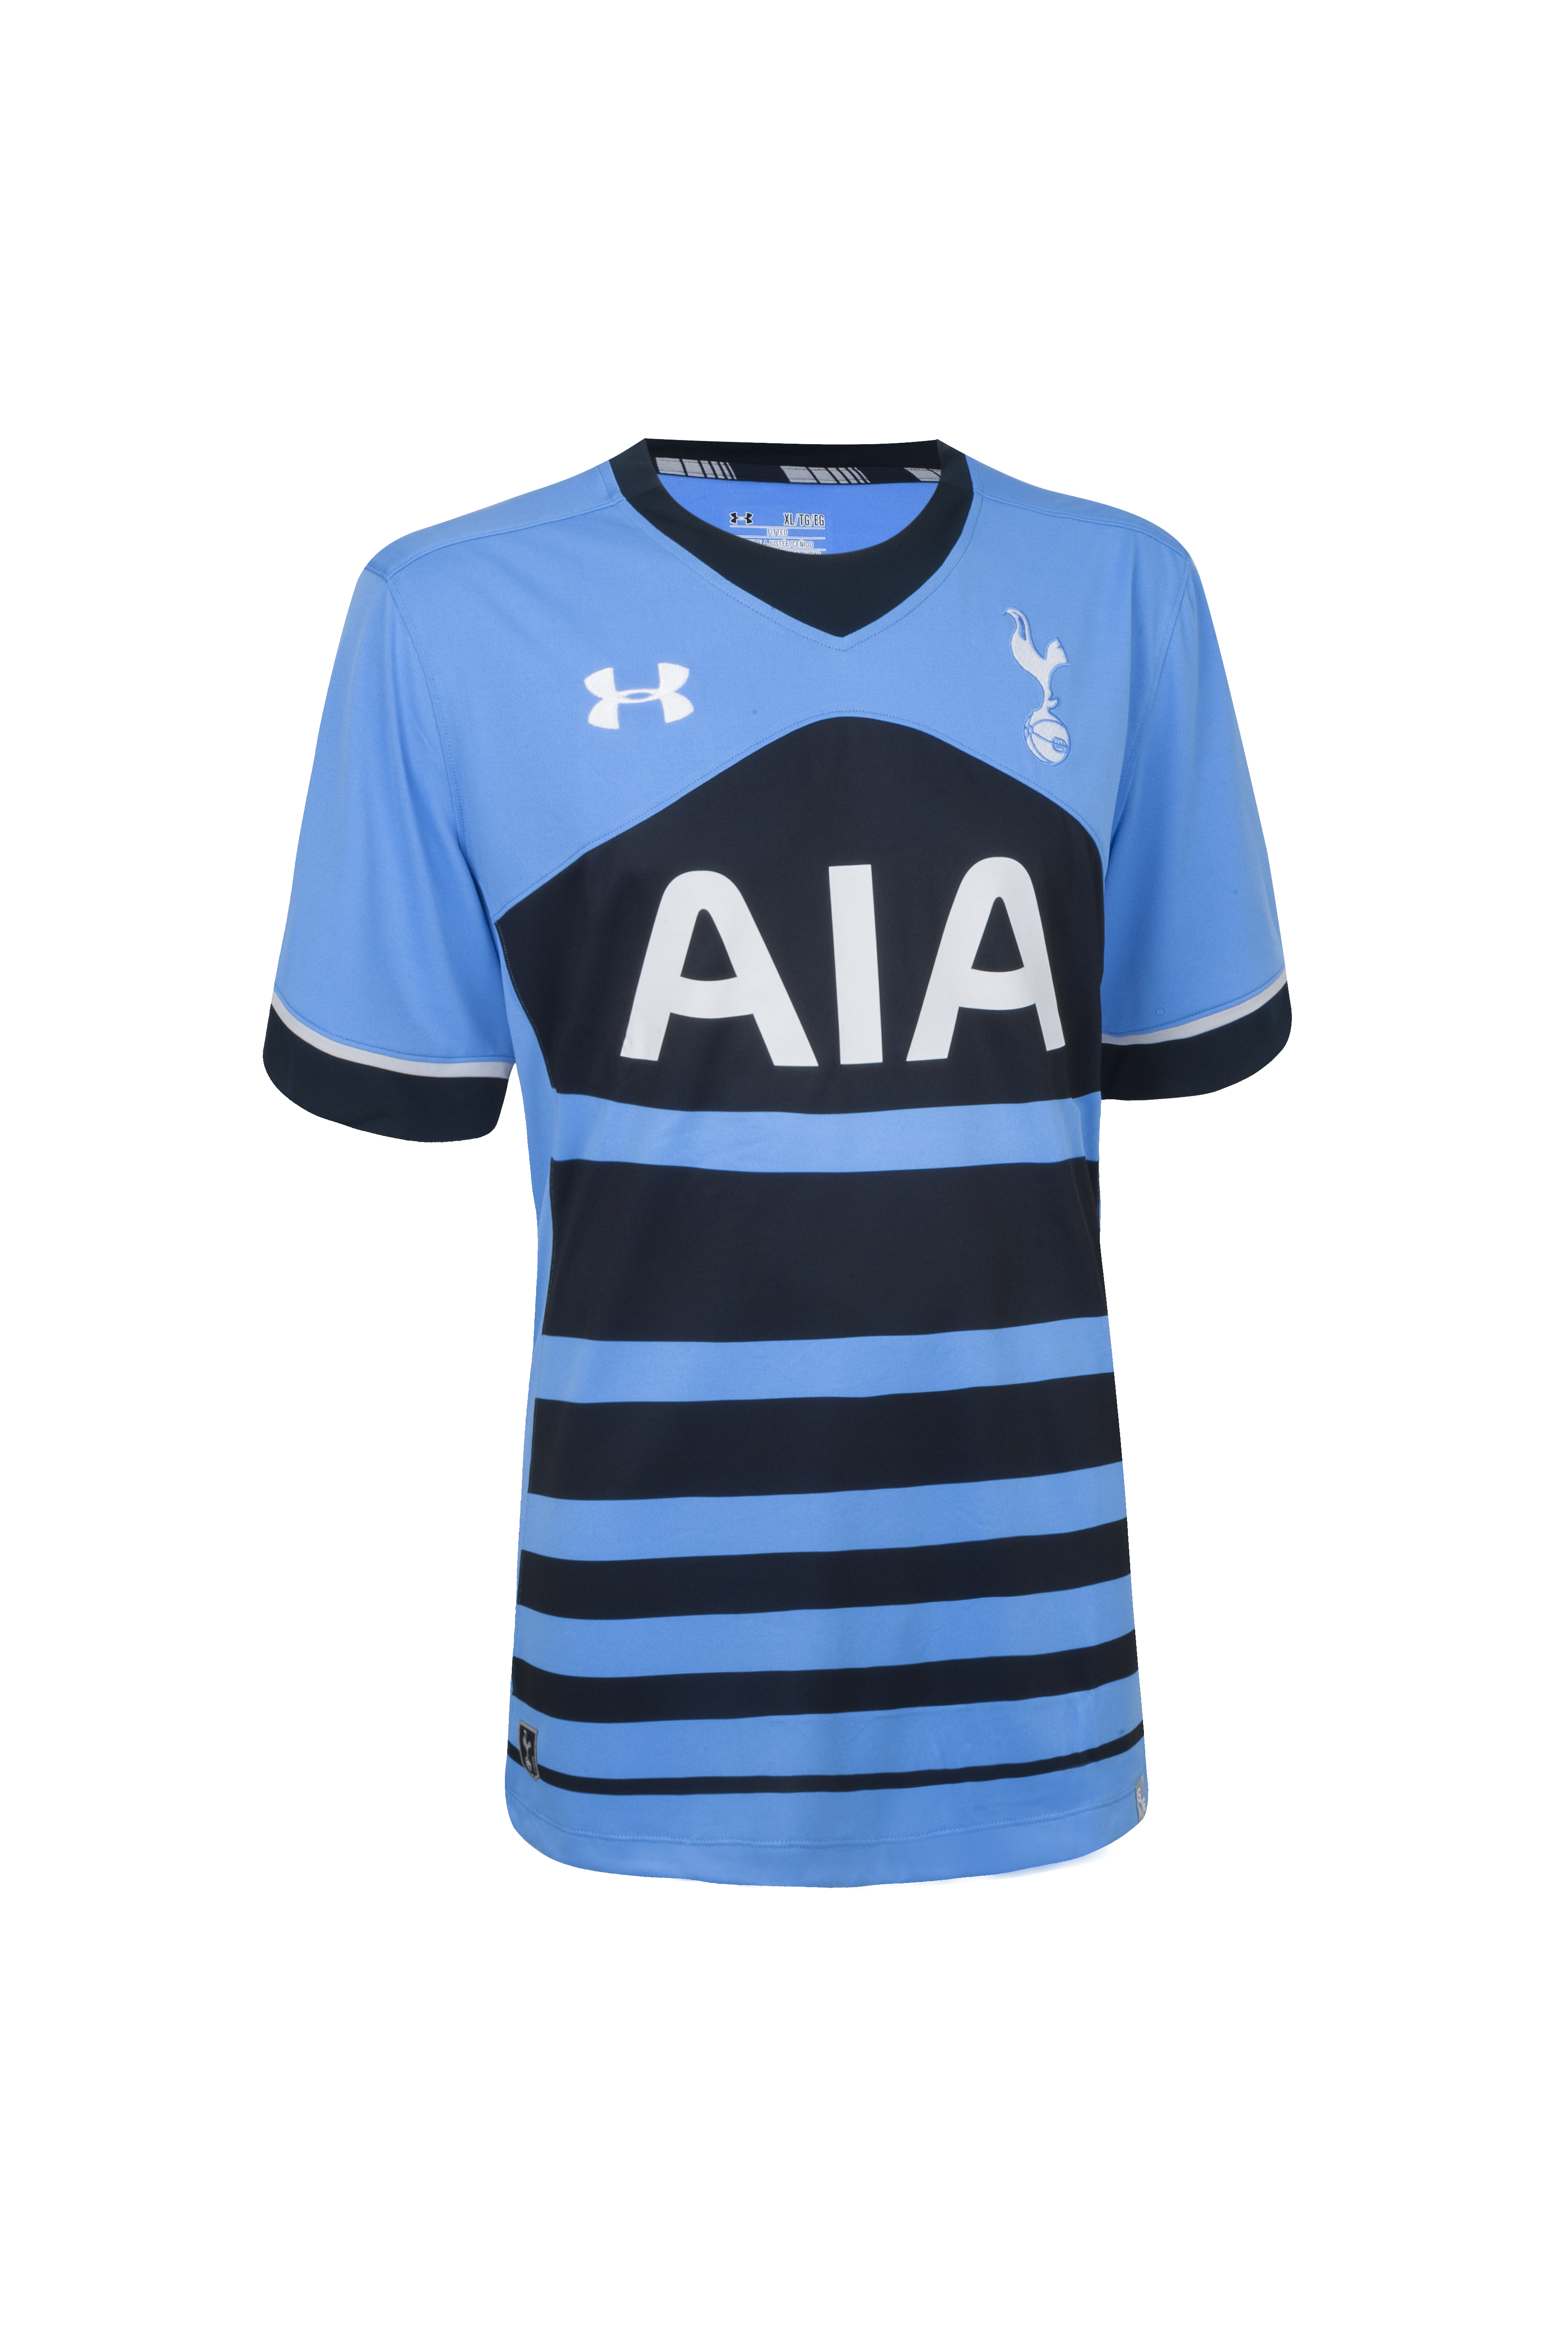 Under Armour Tottenham launch new away kit 2015/16 season – SportLocker